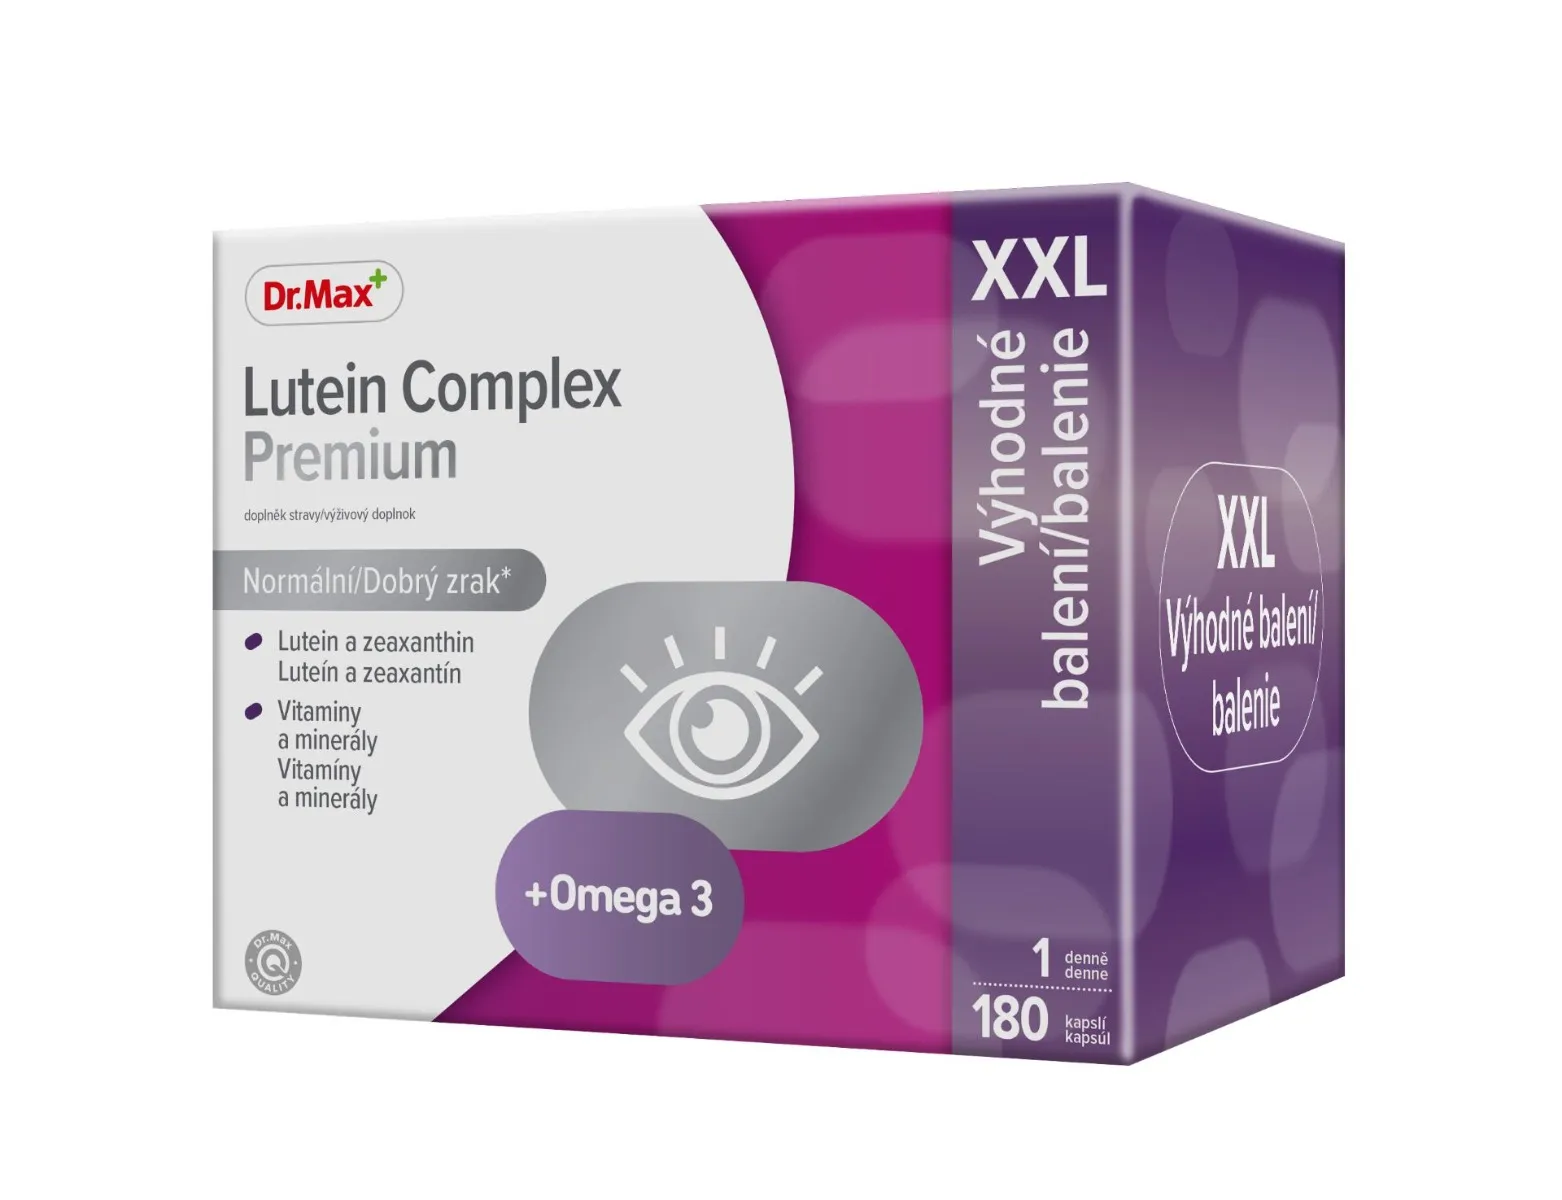 Dr. Max Lutein Complex Premium XXL 180 kapslí